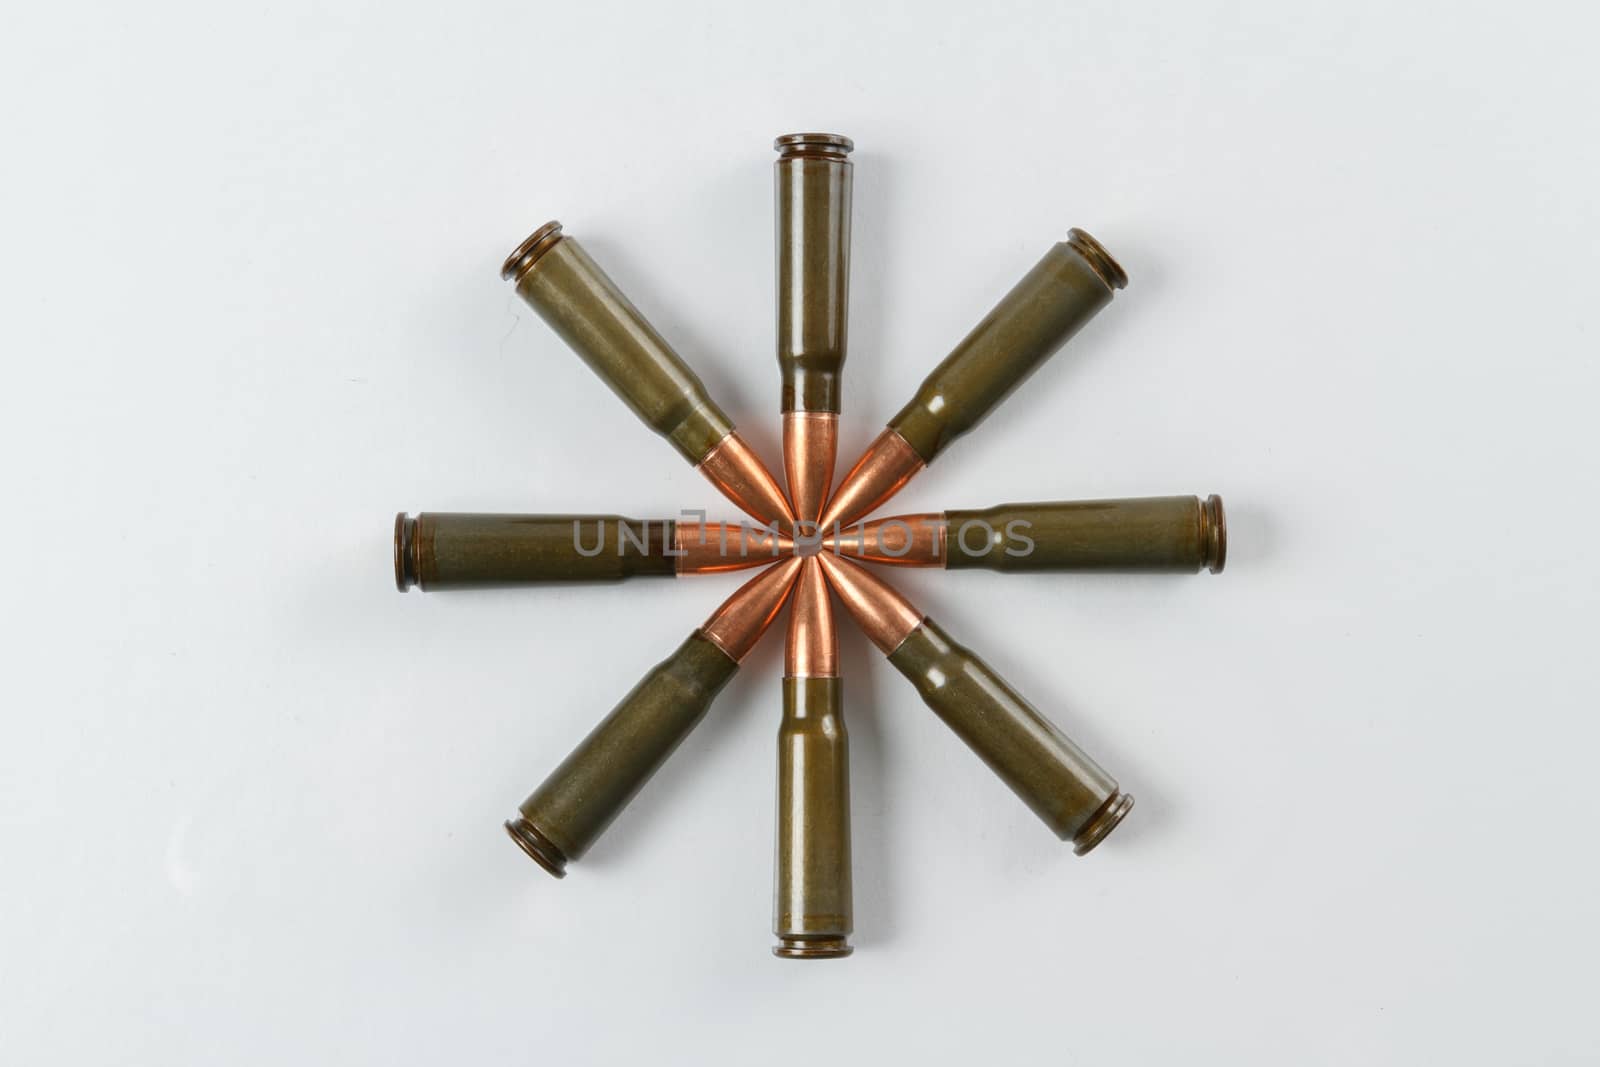 Eight 7.62x39 target shooting rifle cartridges arranged in a symmetrical star shape